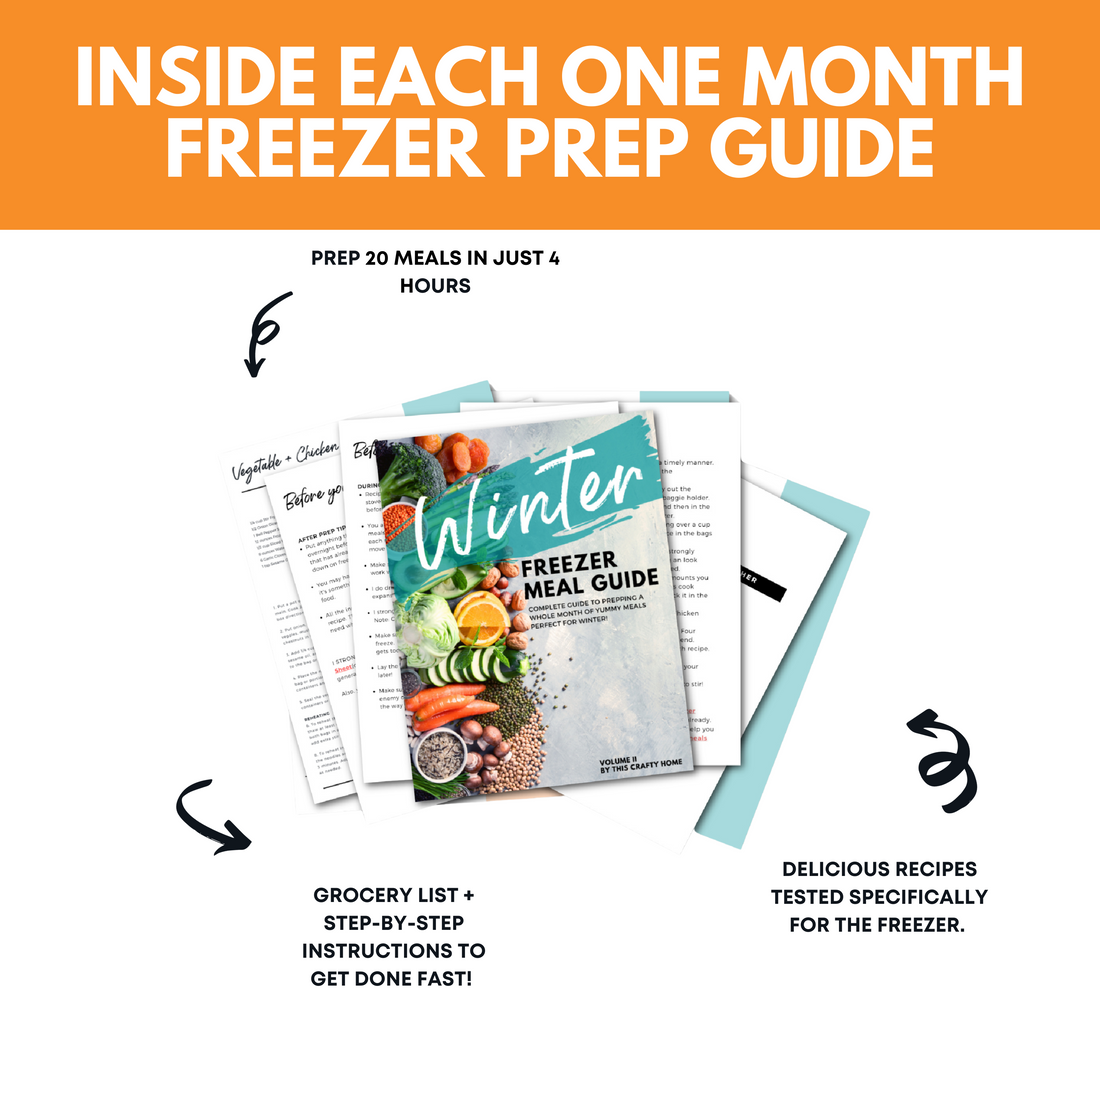 The Winter Freezer Meal Guide Volume I &amp; II Bundle